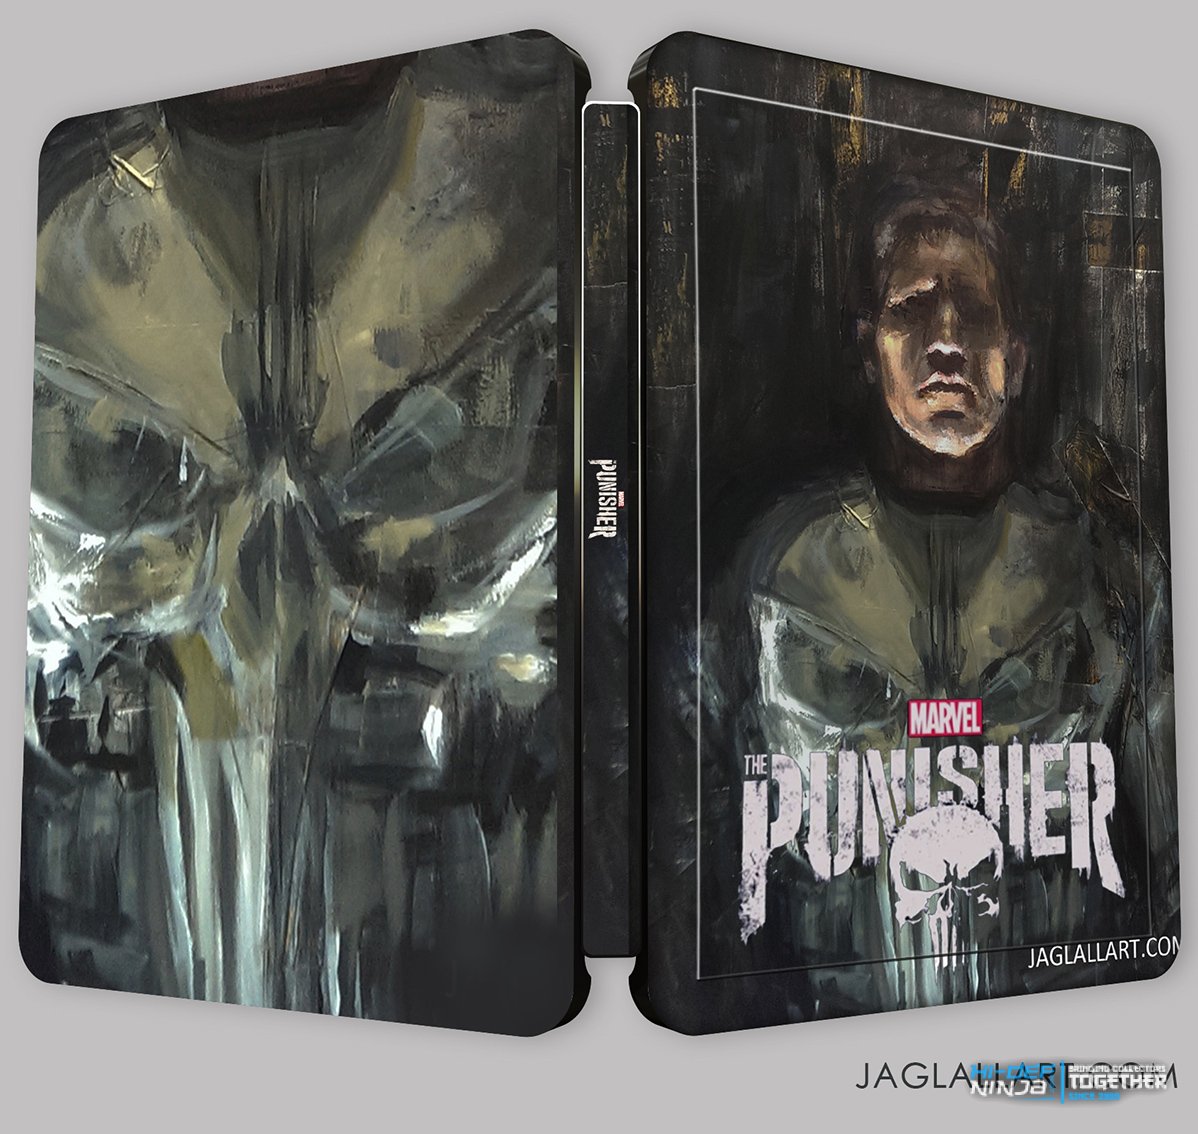 The Punisher - steelbook concept